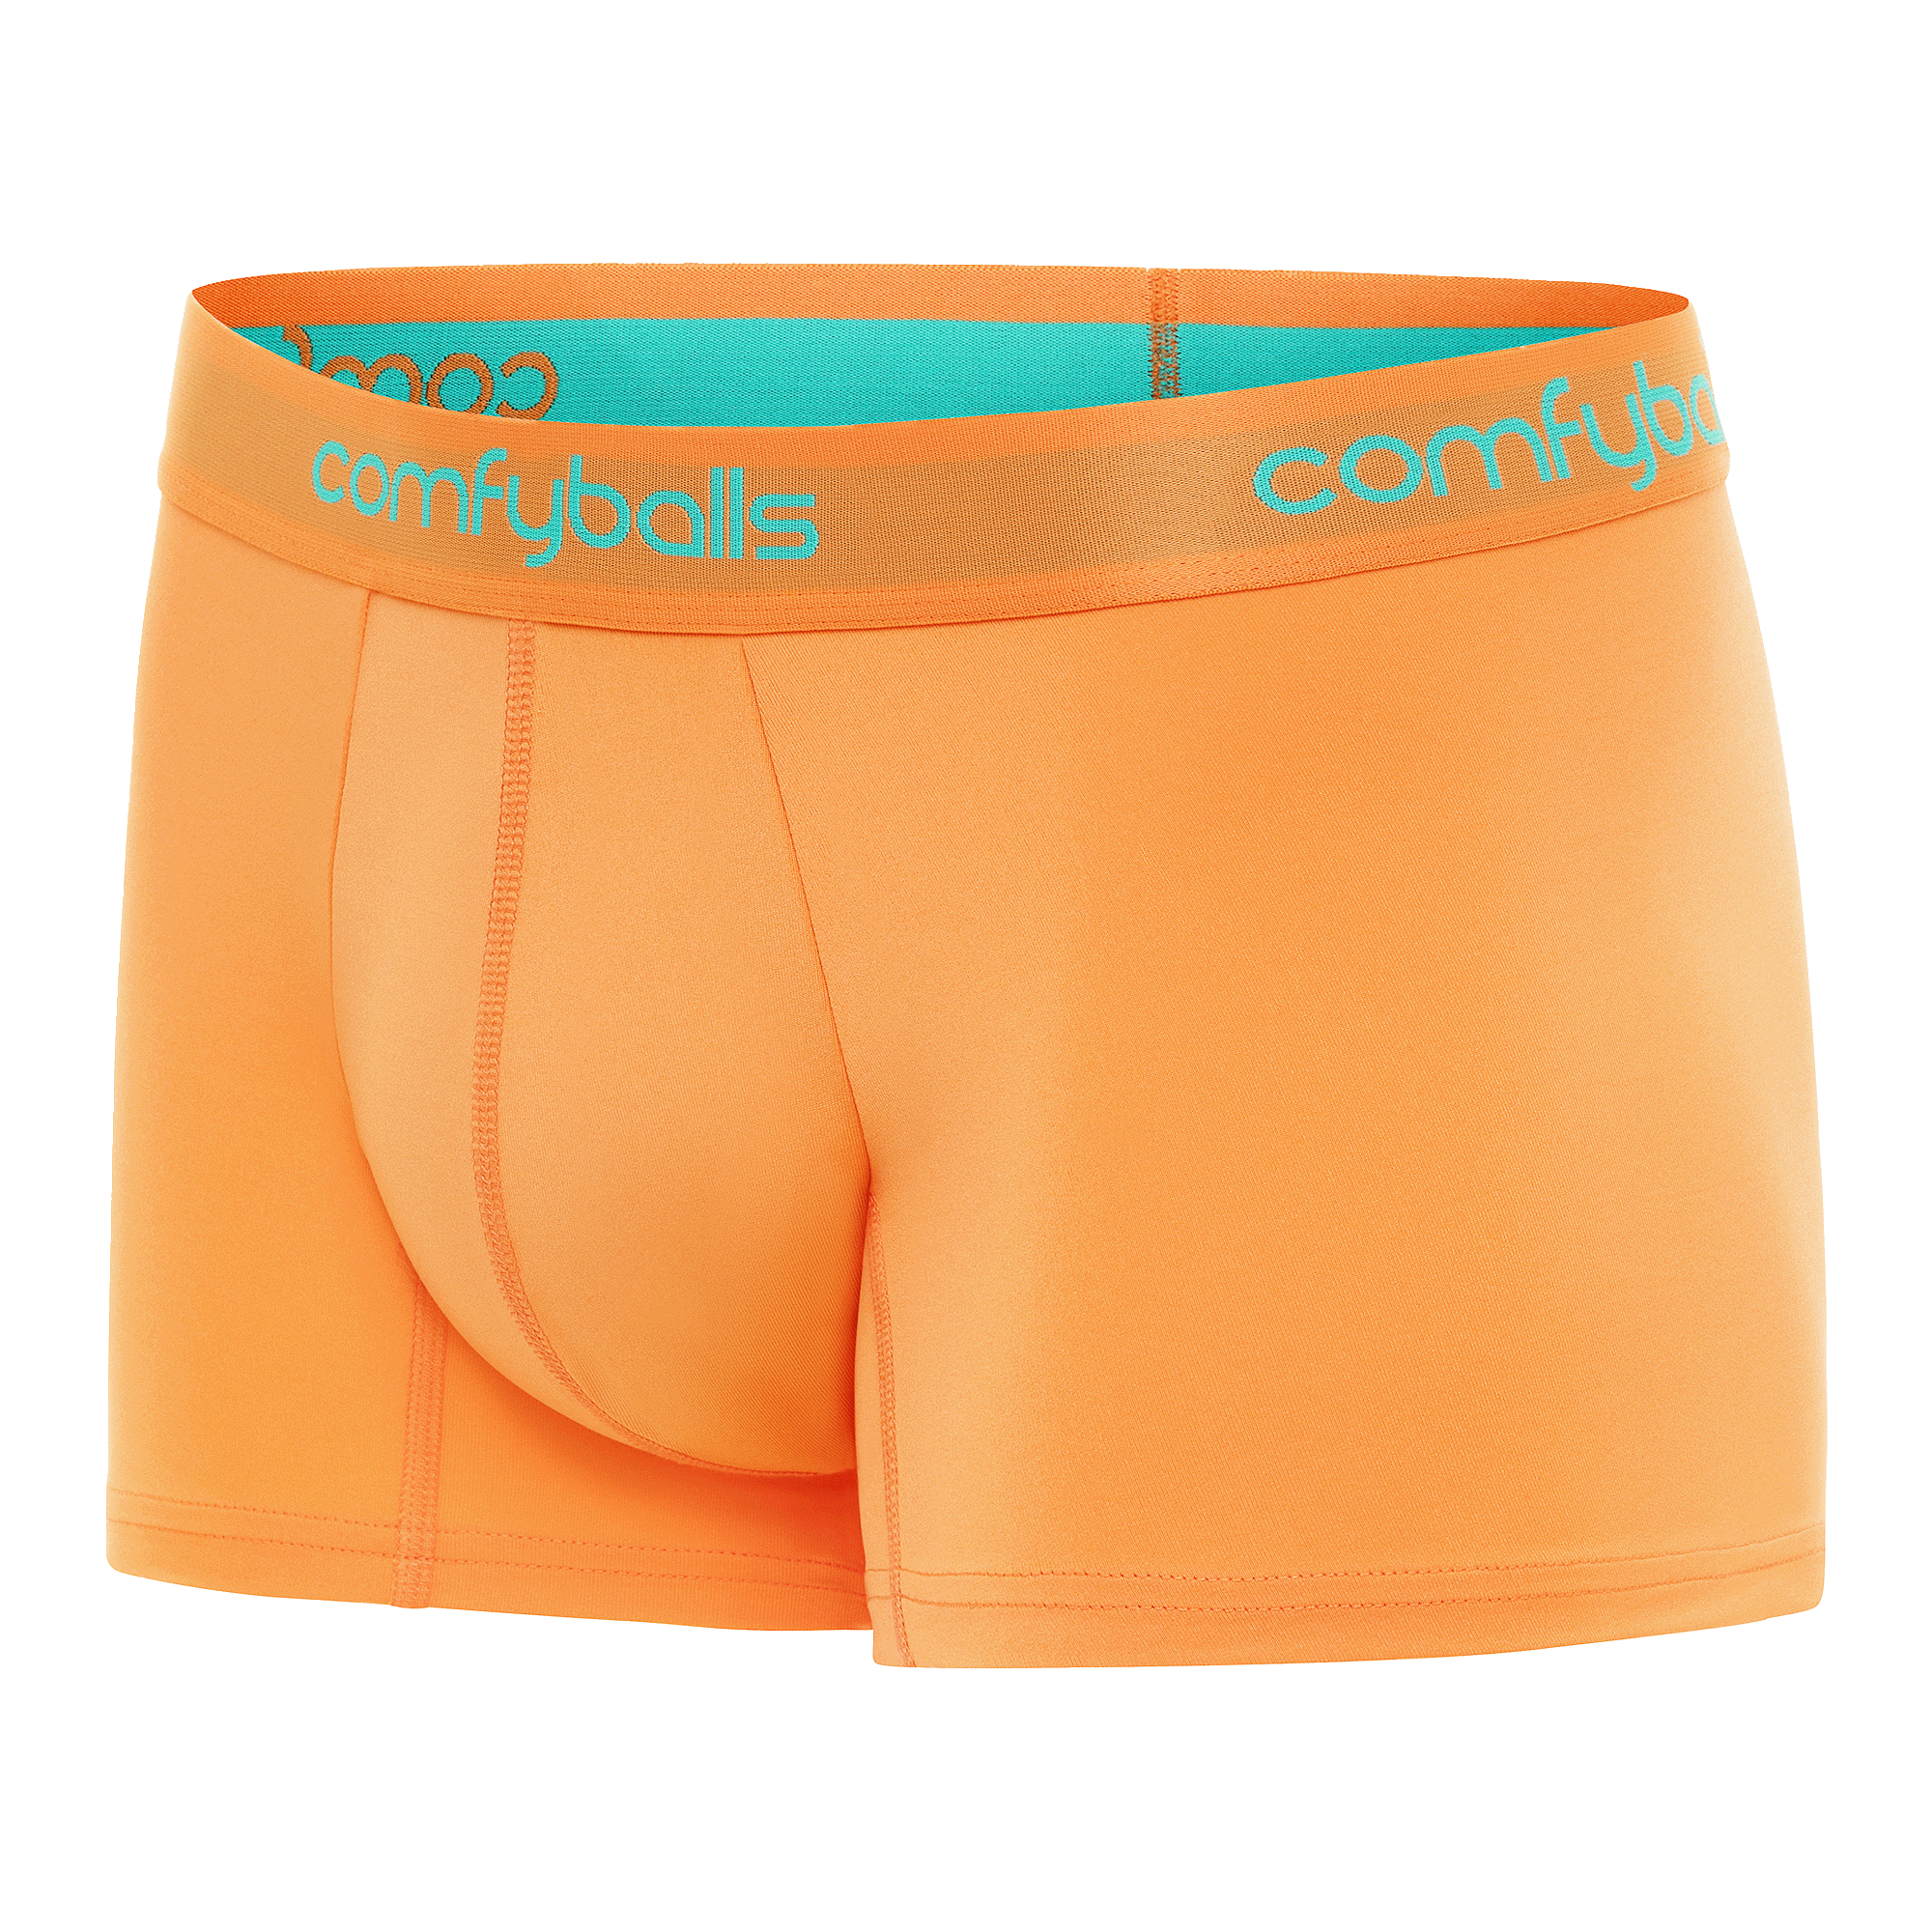 Comfyballs Modal Cotton Stretch Boxer Brief, Heather Grey/Orange